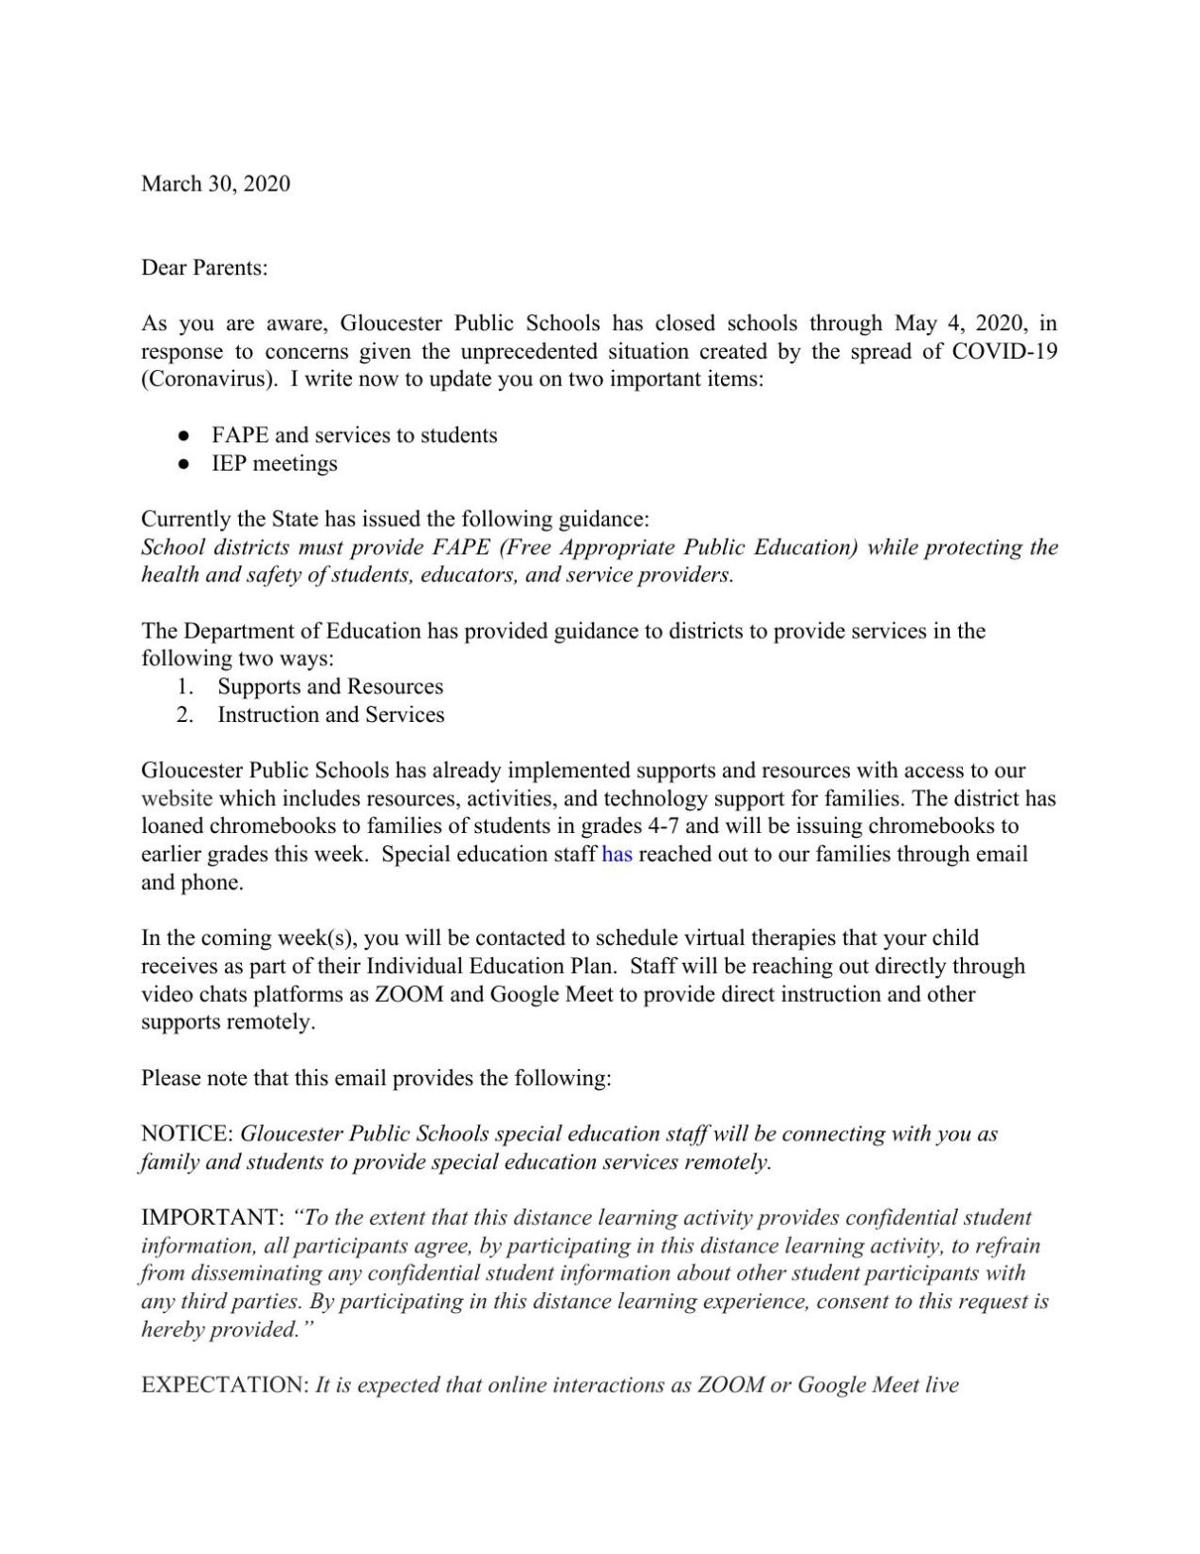 Letter To Gloucester School Parents March 30 Gloucestertimes Com